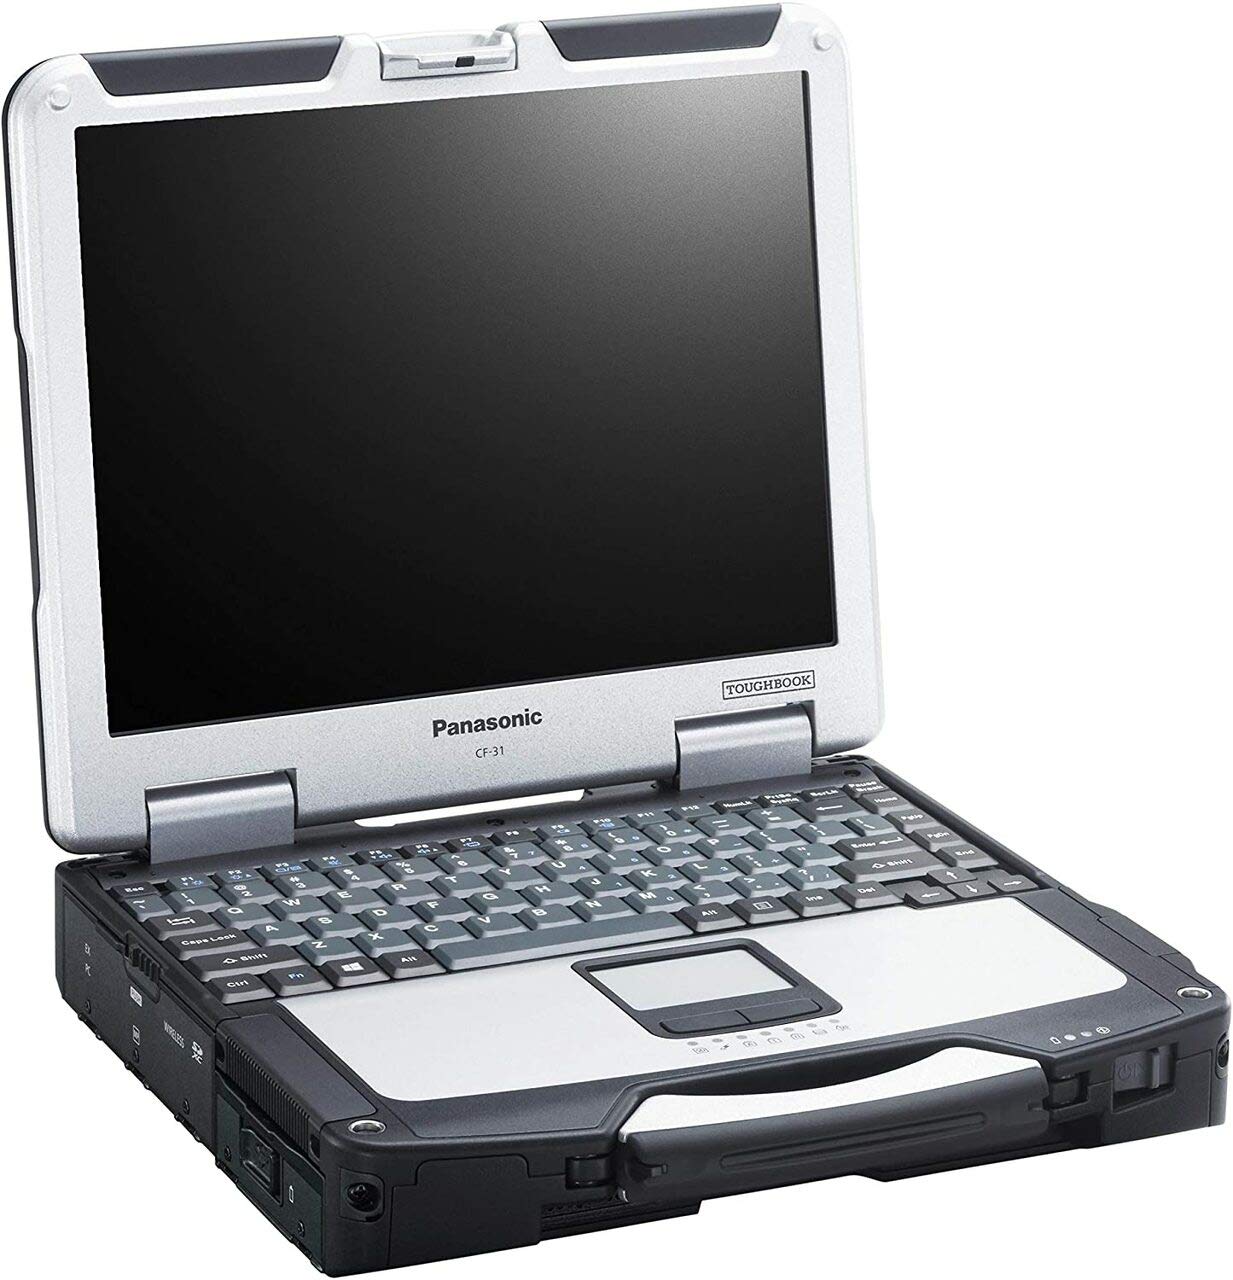 Toughbook PANASONIC CF-31 MK1 i5 2.4GHZ, 320GB Hard Drive, 4GB Ram, Windows 7 Pro